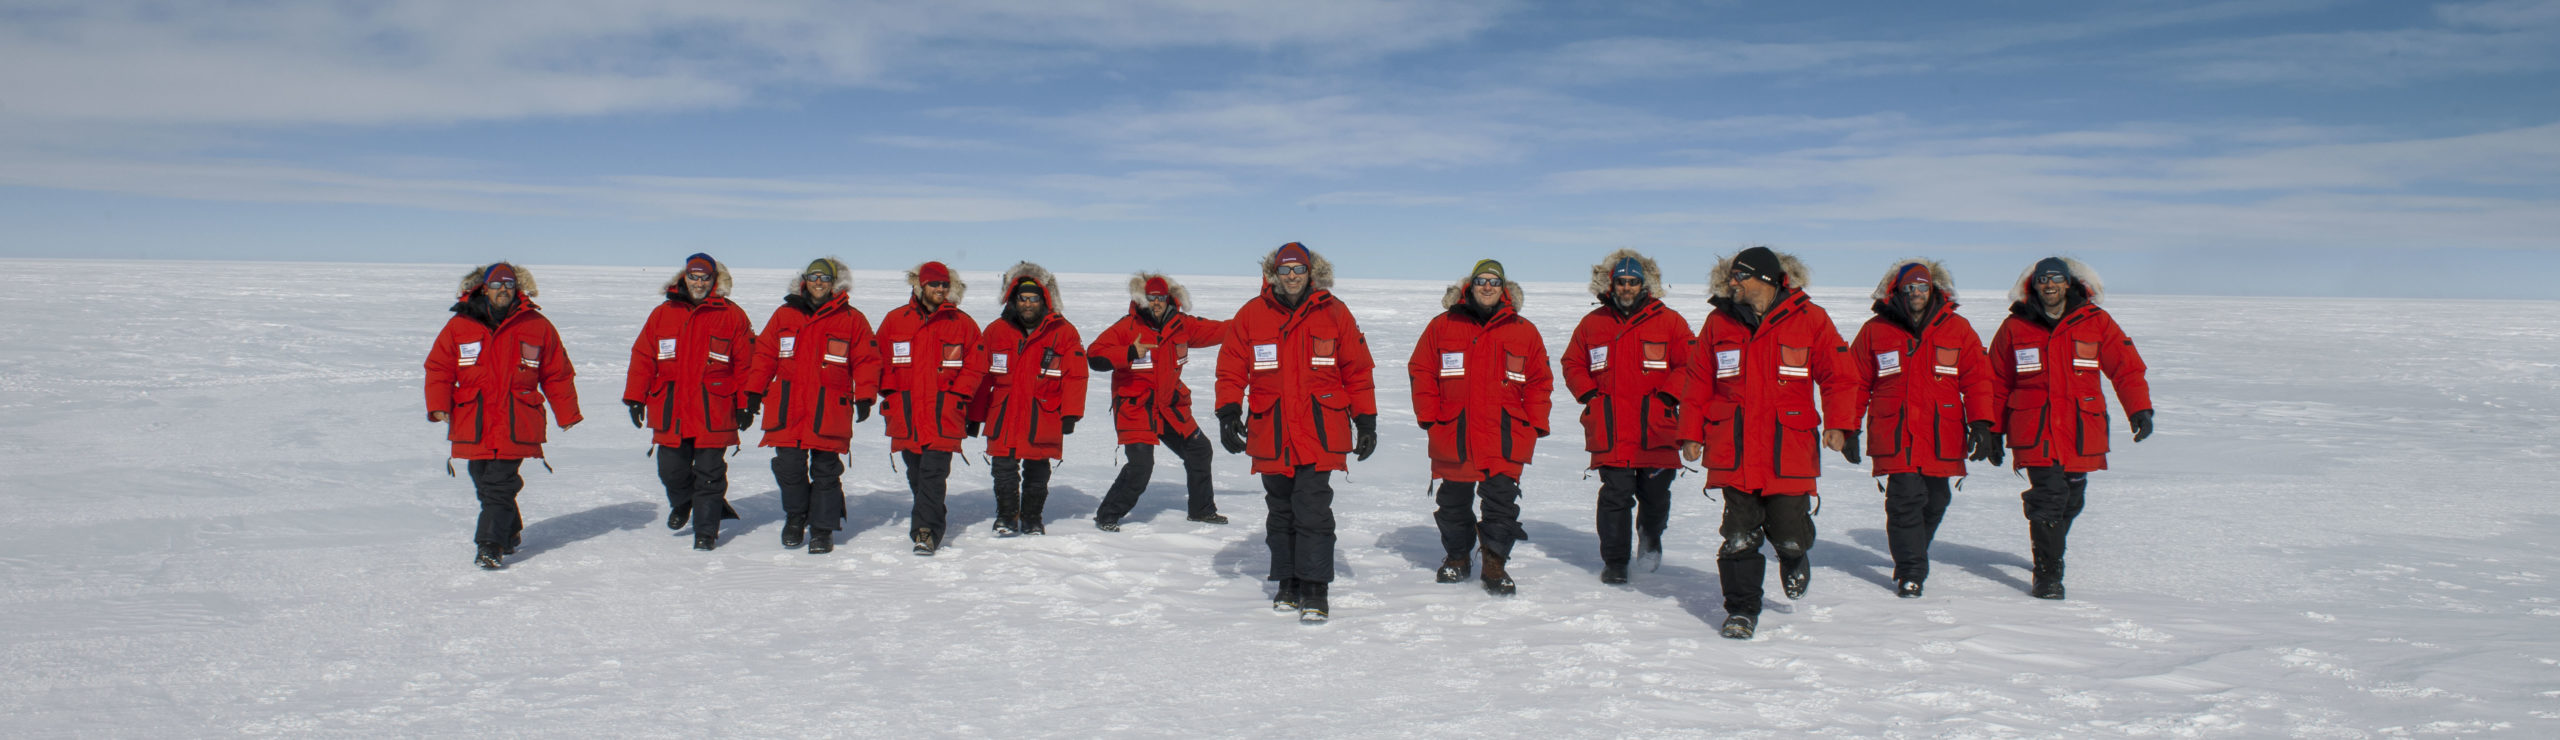 Our people - British Antarctic Survey